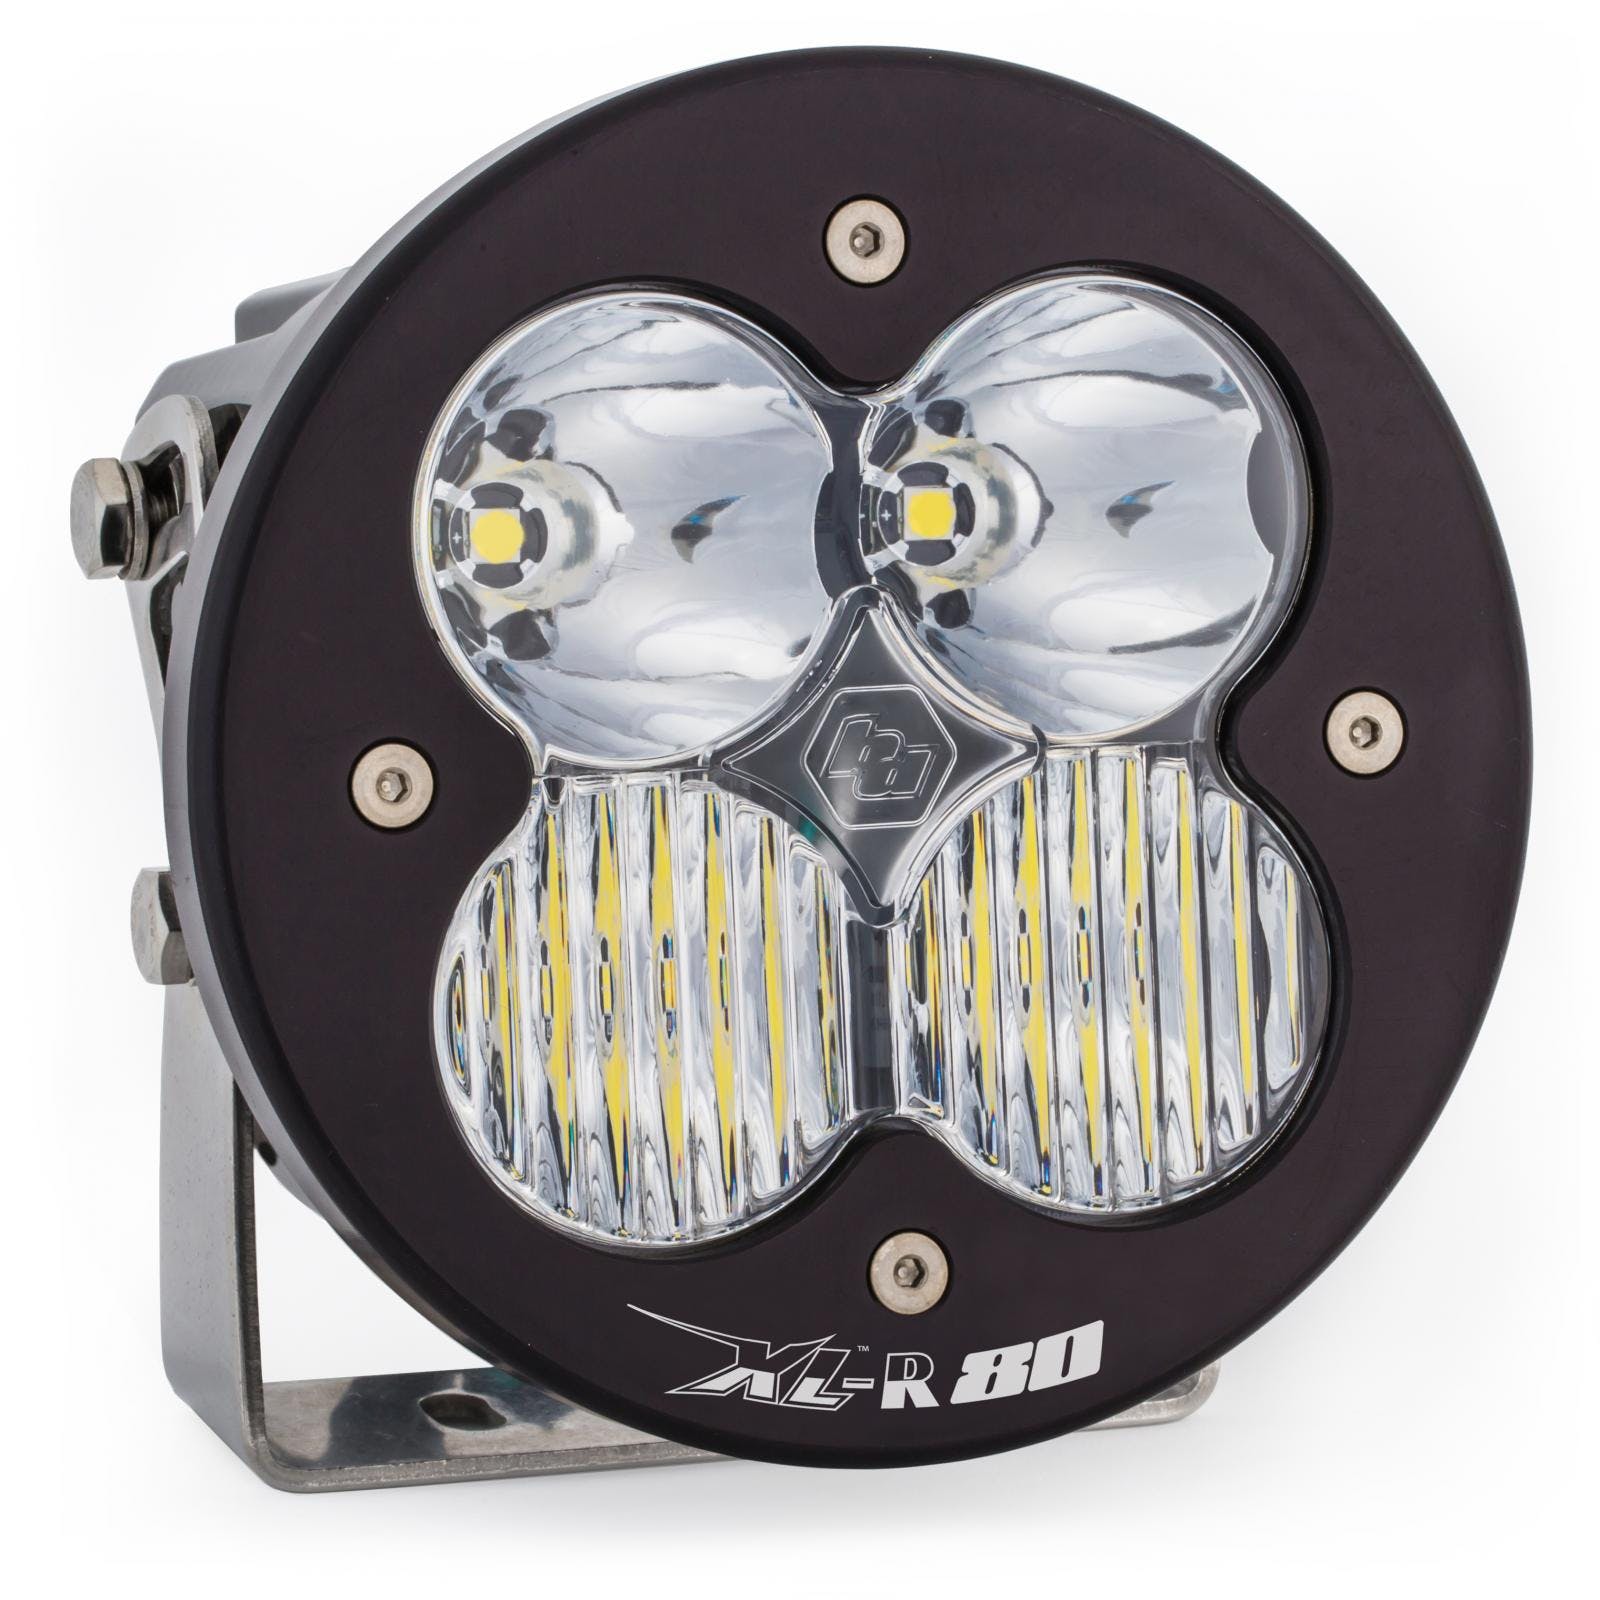 Baja Designs 760003 LED Light Pods Clear Lens Spot Each XL R 80 Driving/Combo